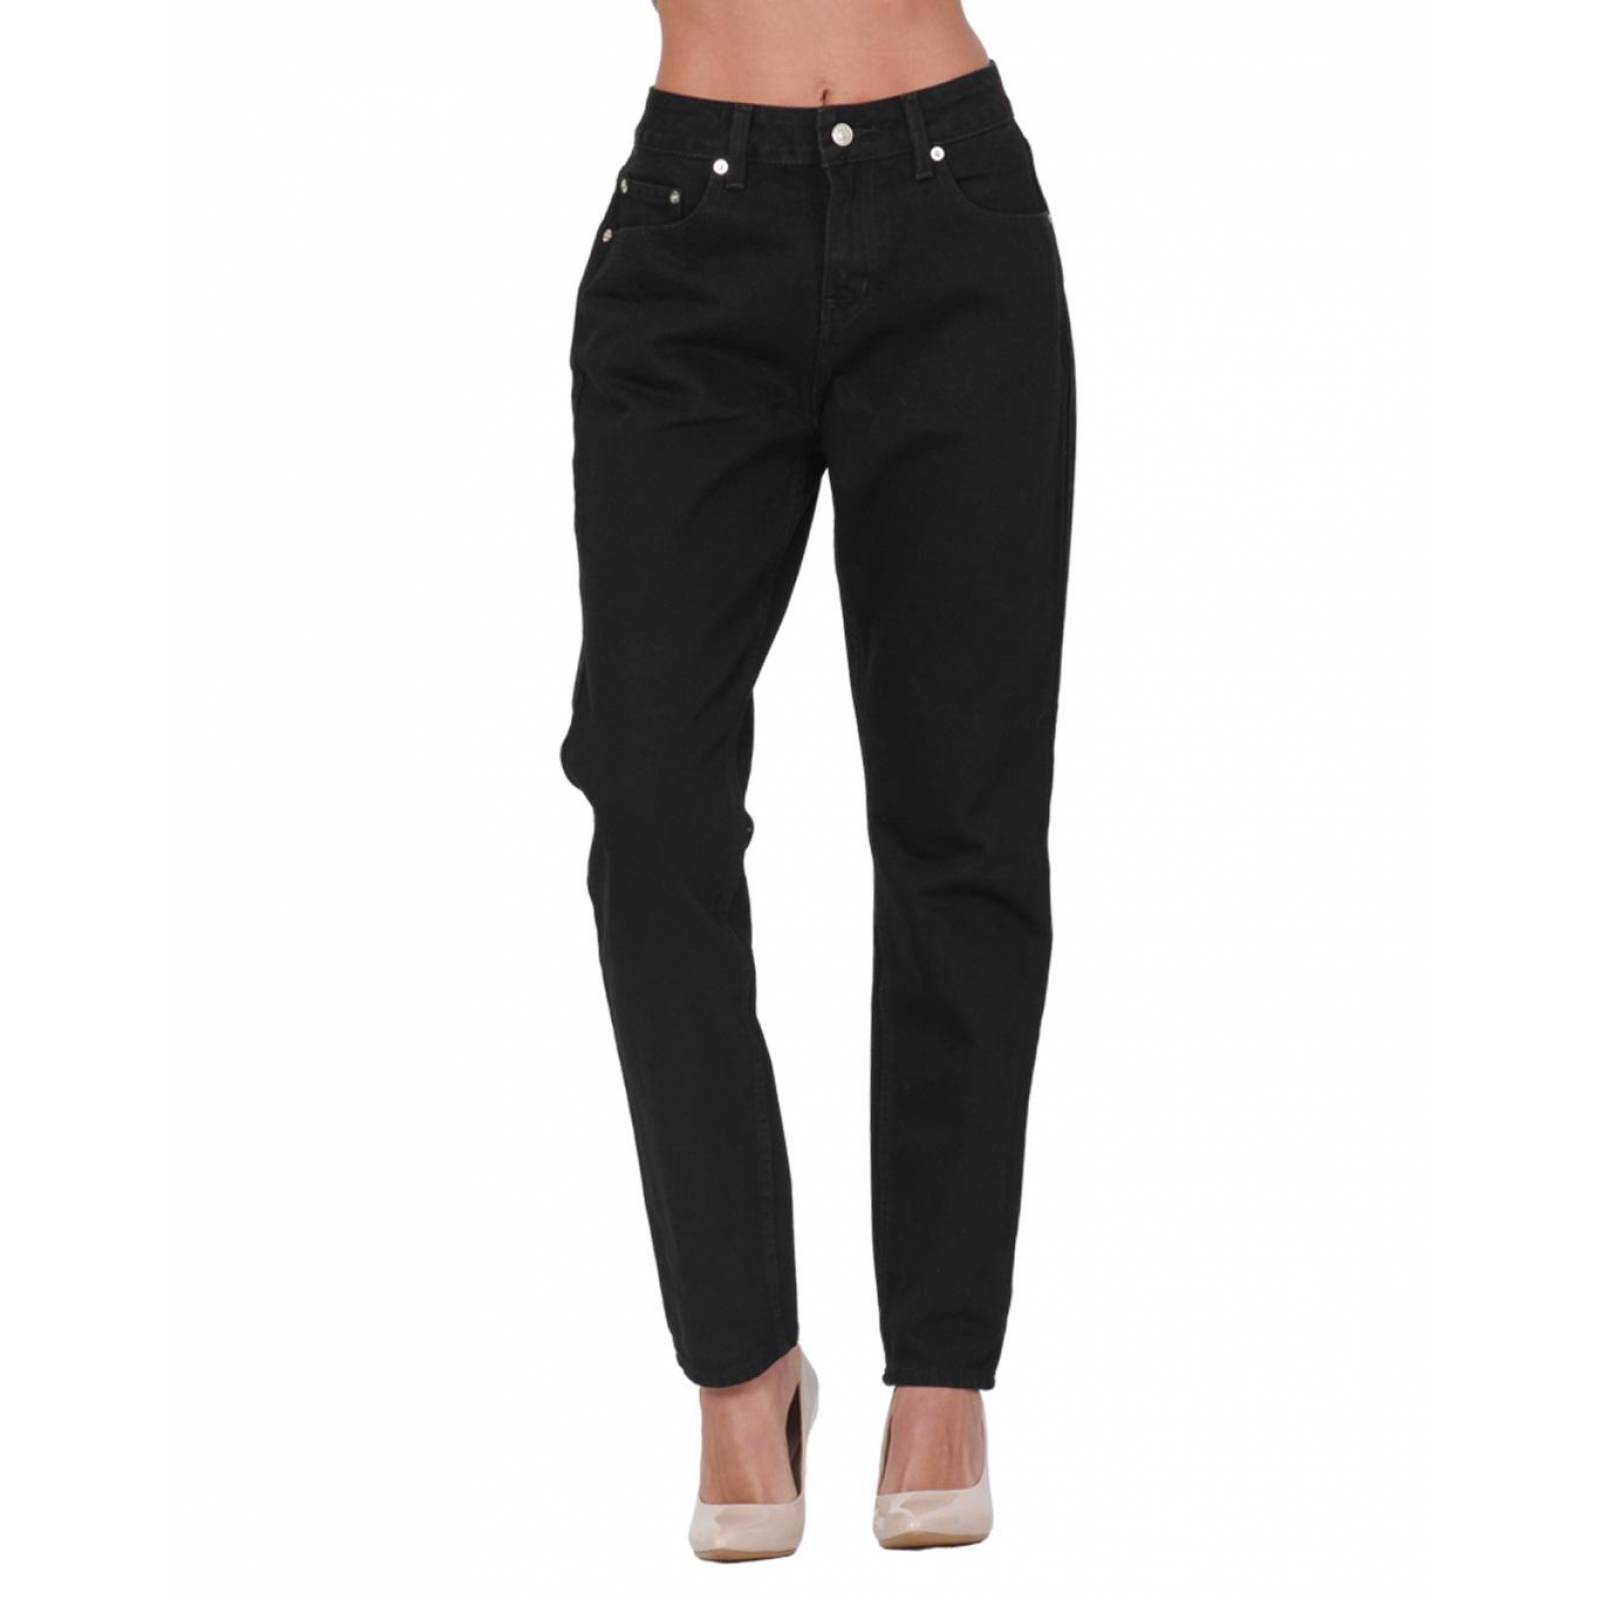 Jeans Moda Mujer Oggi Black 59103616 Mezclilla 